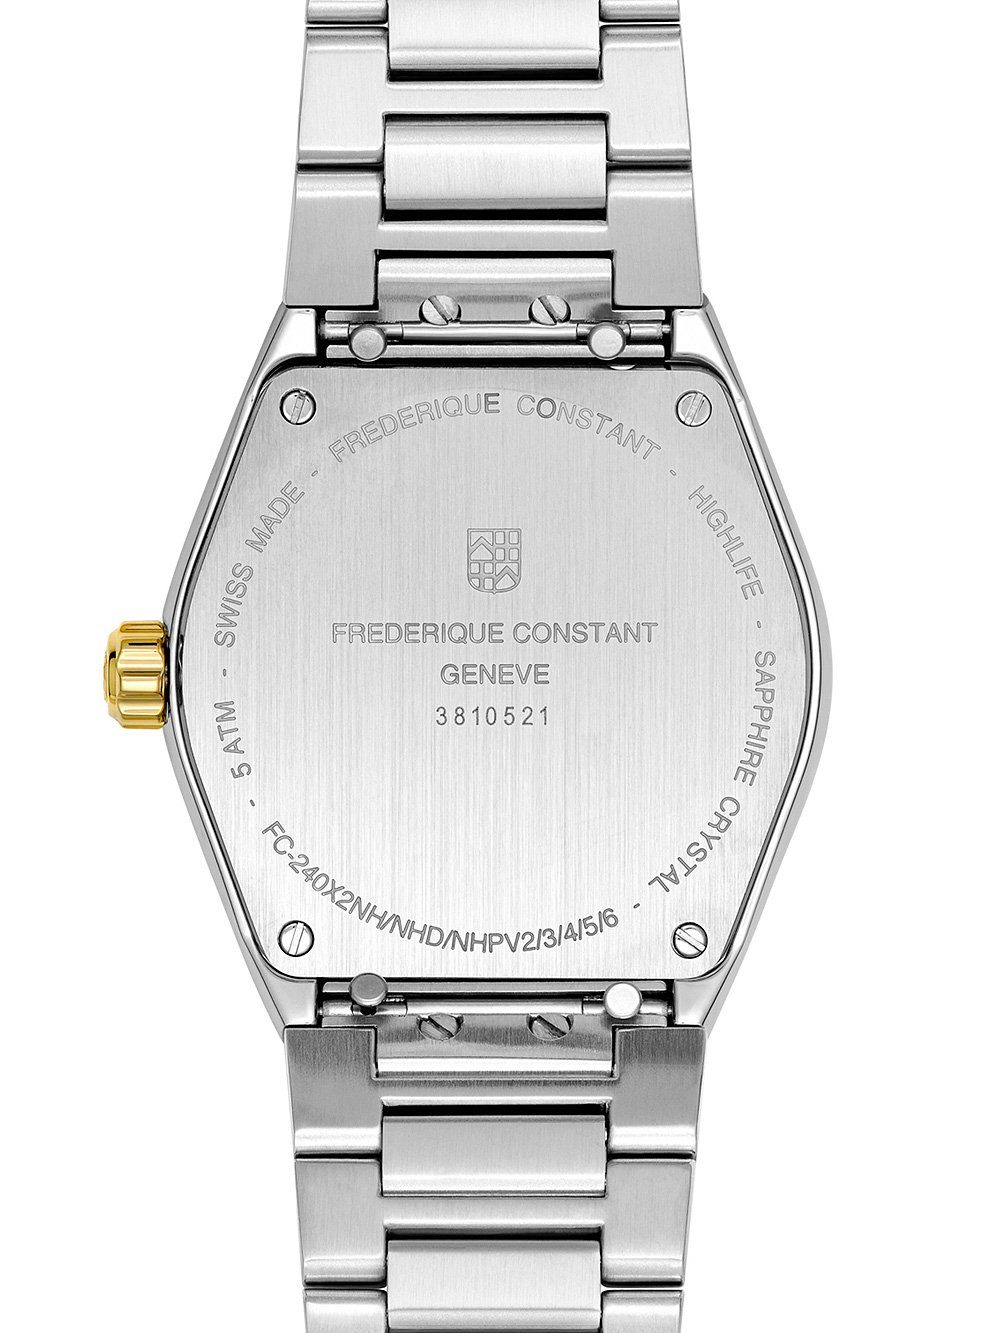 FC-240V2NH3B Highlife Schweizer Constant Uhr Frederique Constant Damenuhr Frederique